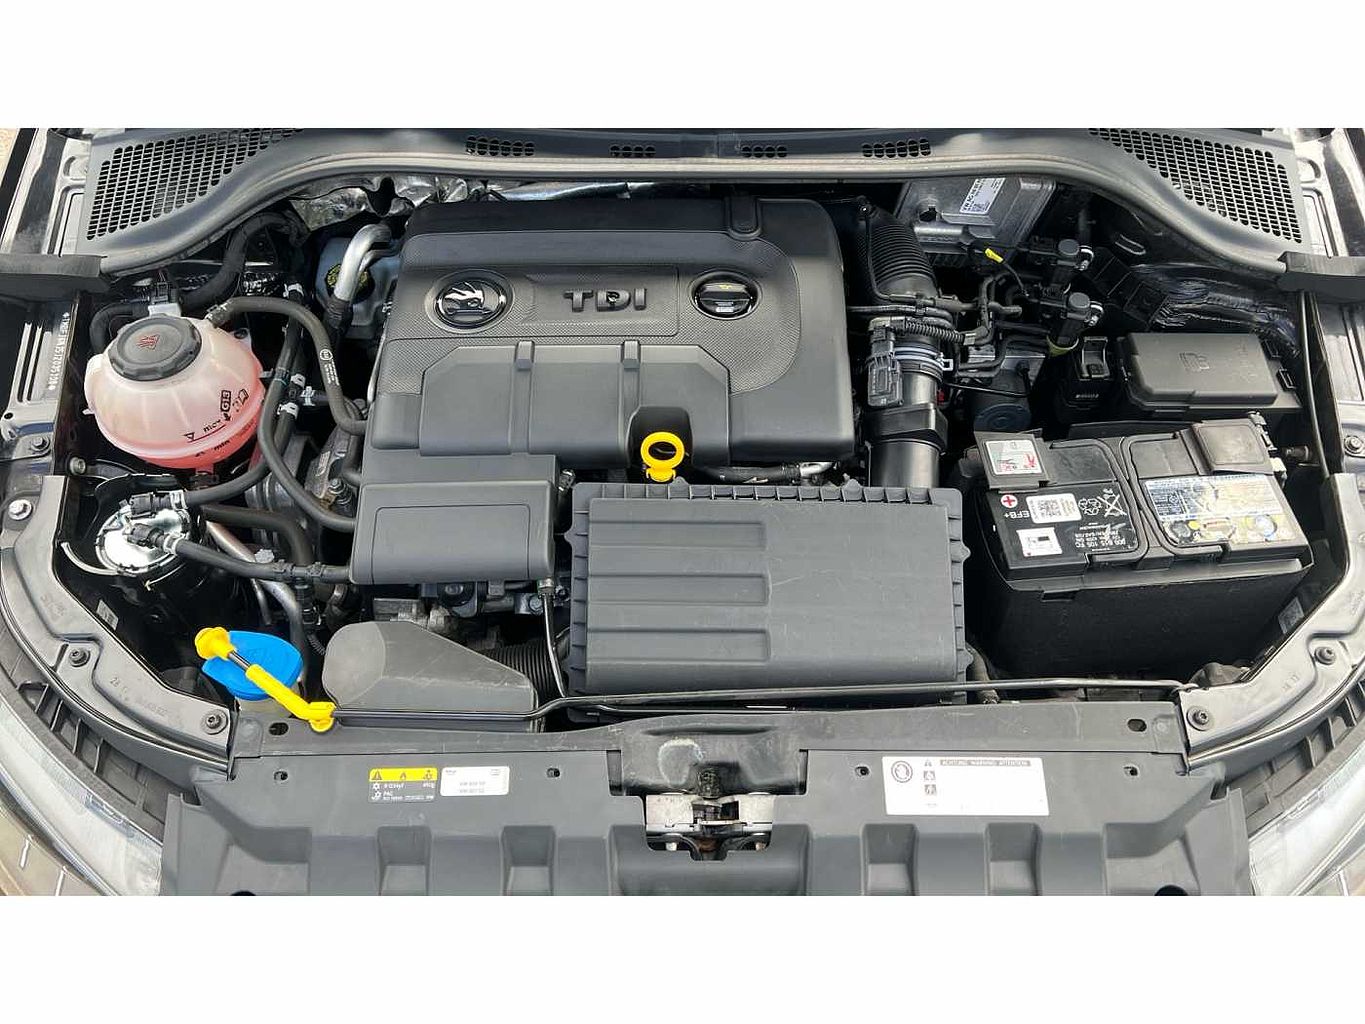 SKODA Fabia 1.4 TDI (105ps) SE L (s/s) 5-Dr Hatchback